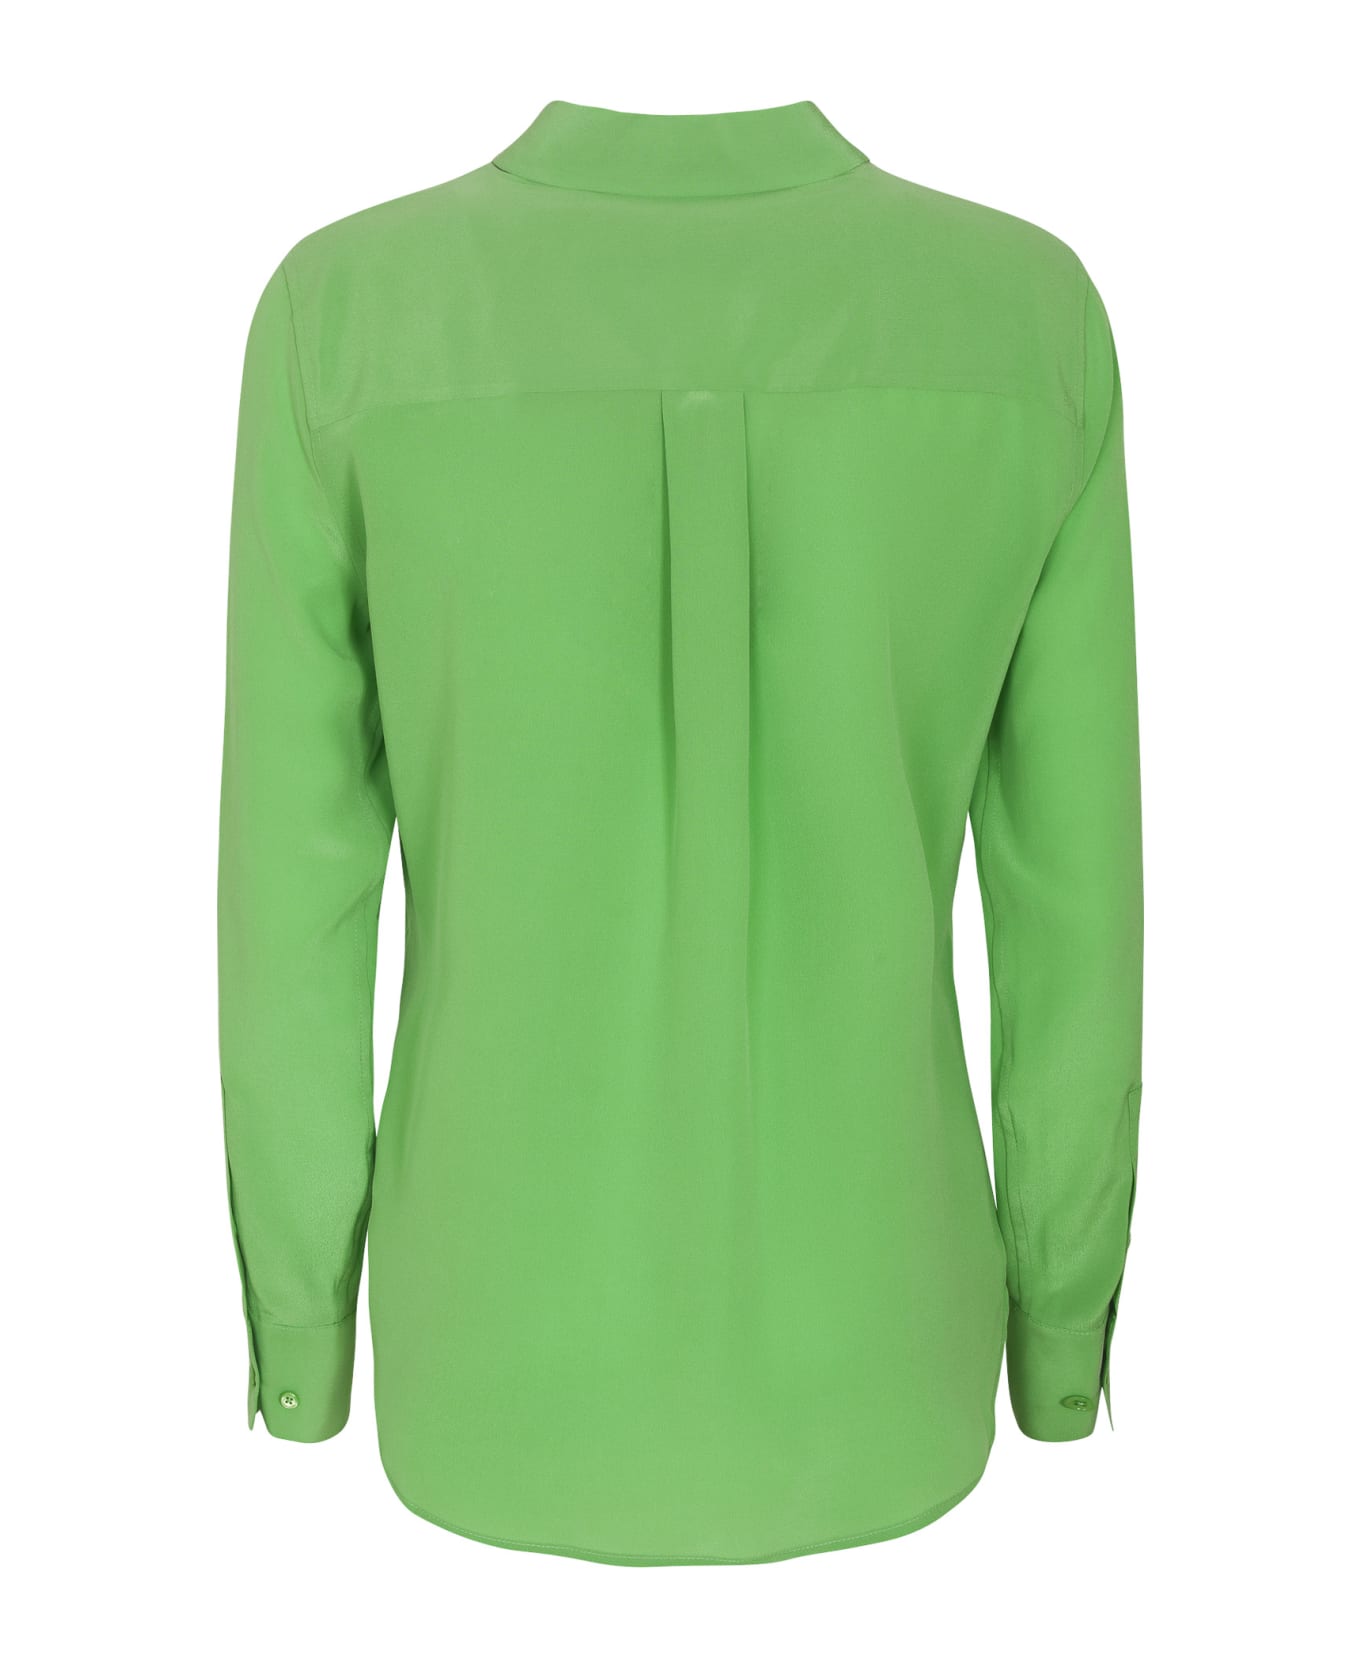 Equipment Round Hem Patched Pocket Plain Shirt - Vibrant Green